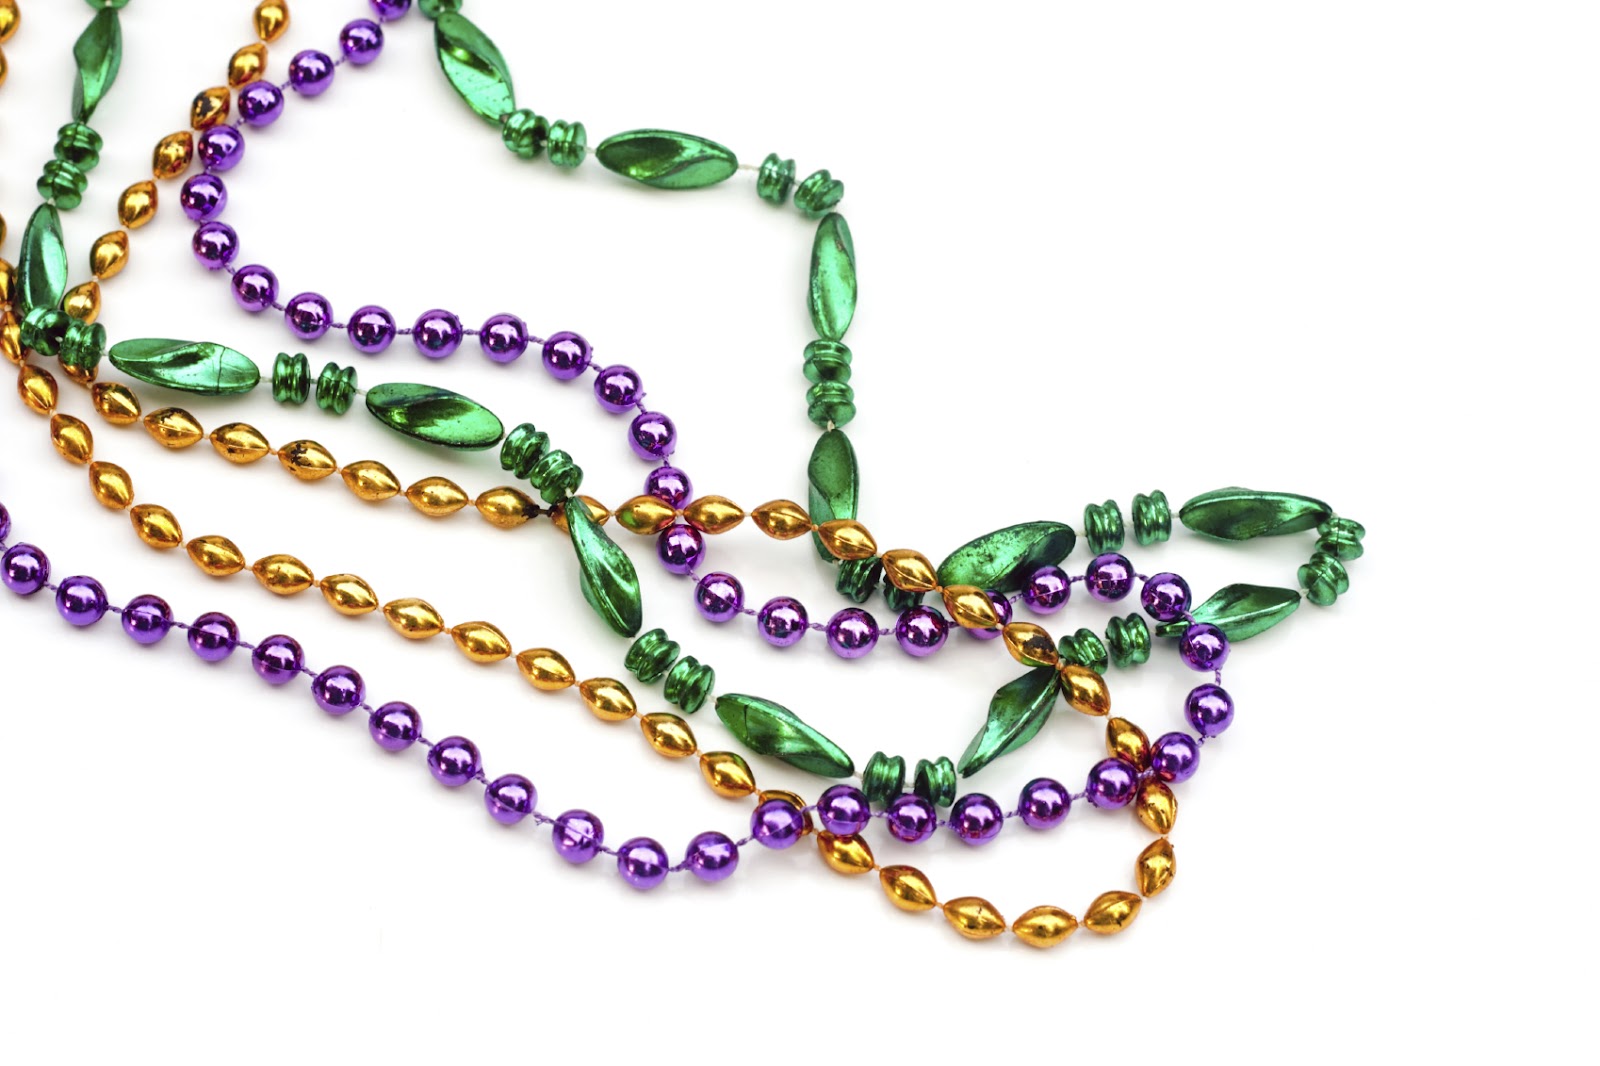 Mardi Gras Beads Clip Art Mar